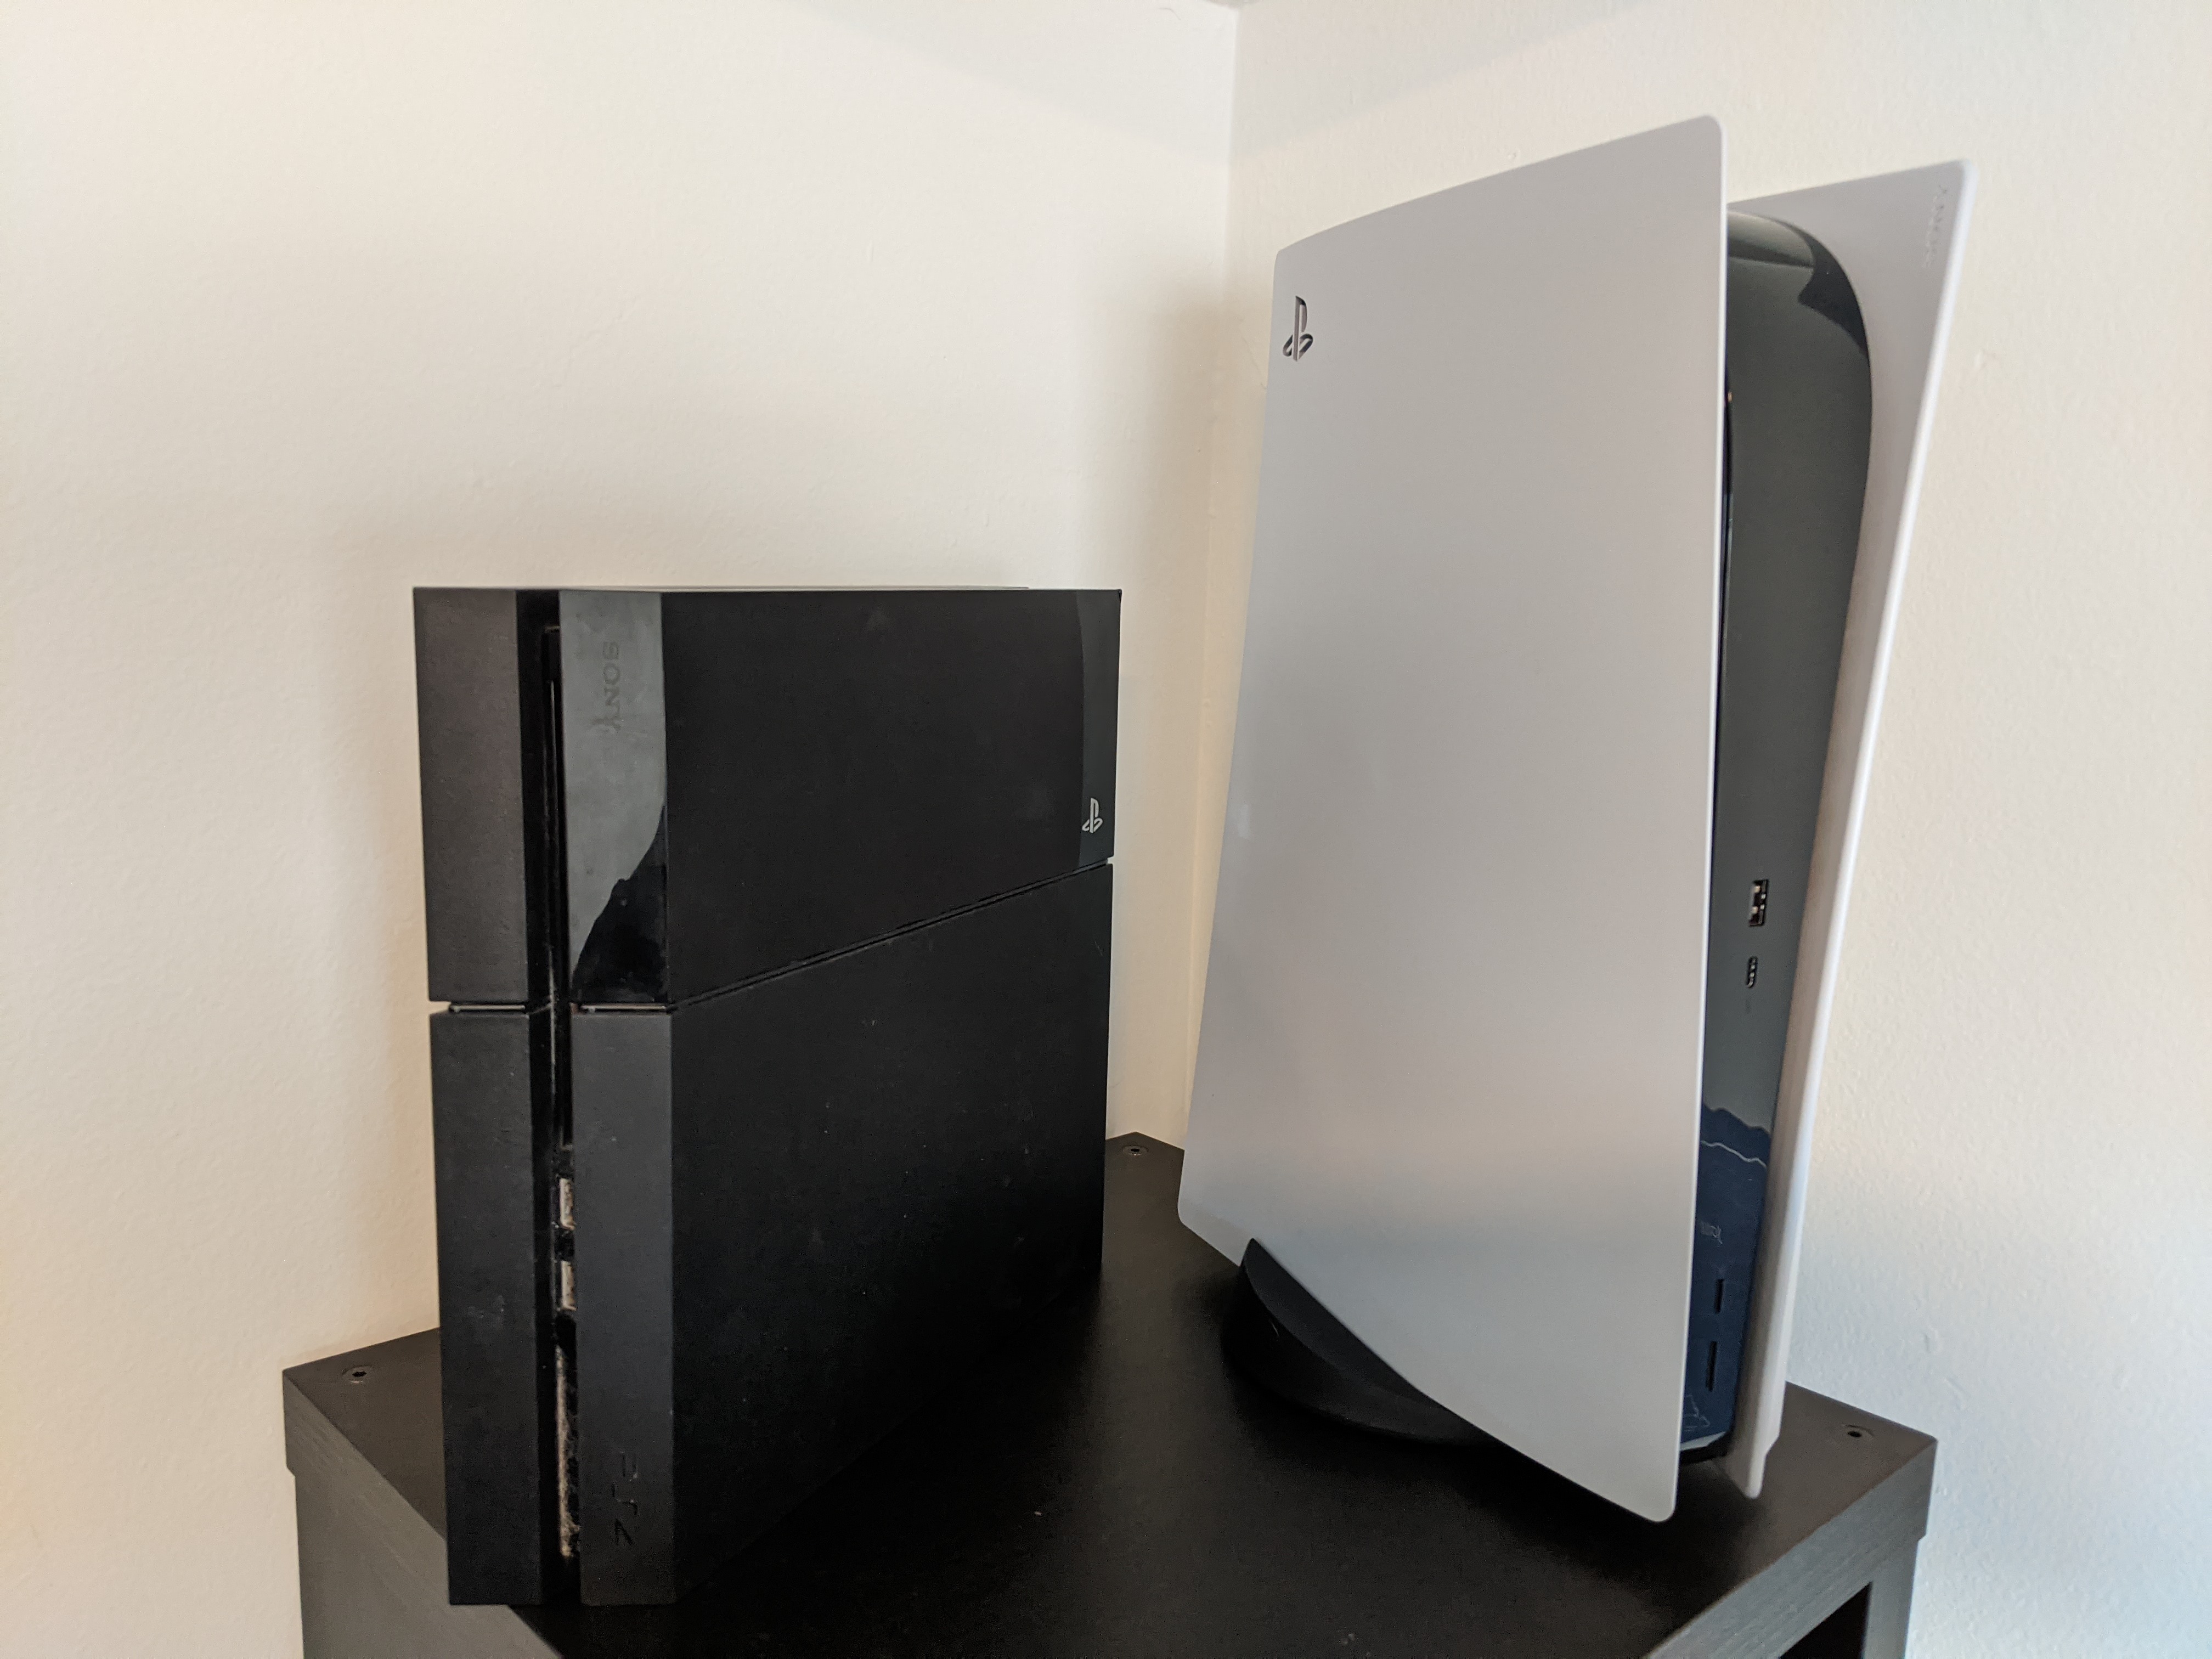 PS5 Next to an Original Launch PS4